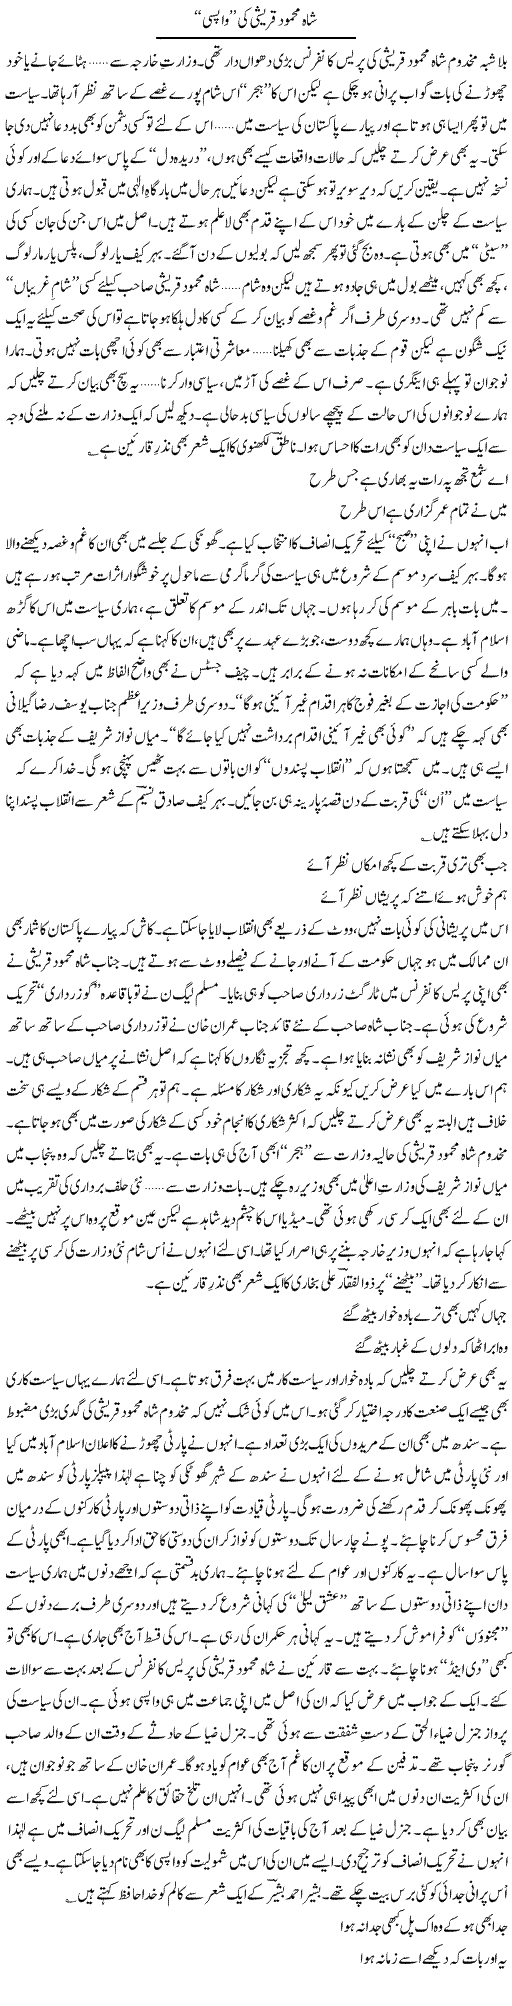 Shah Mehmood Qureshi Express Column Ijaz Khan 20 November 2011